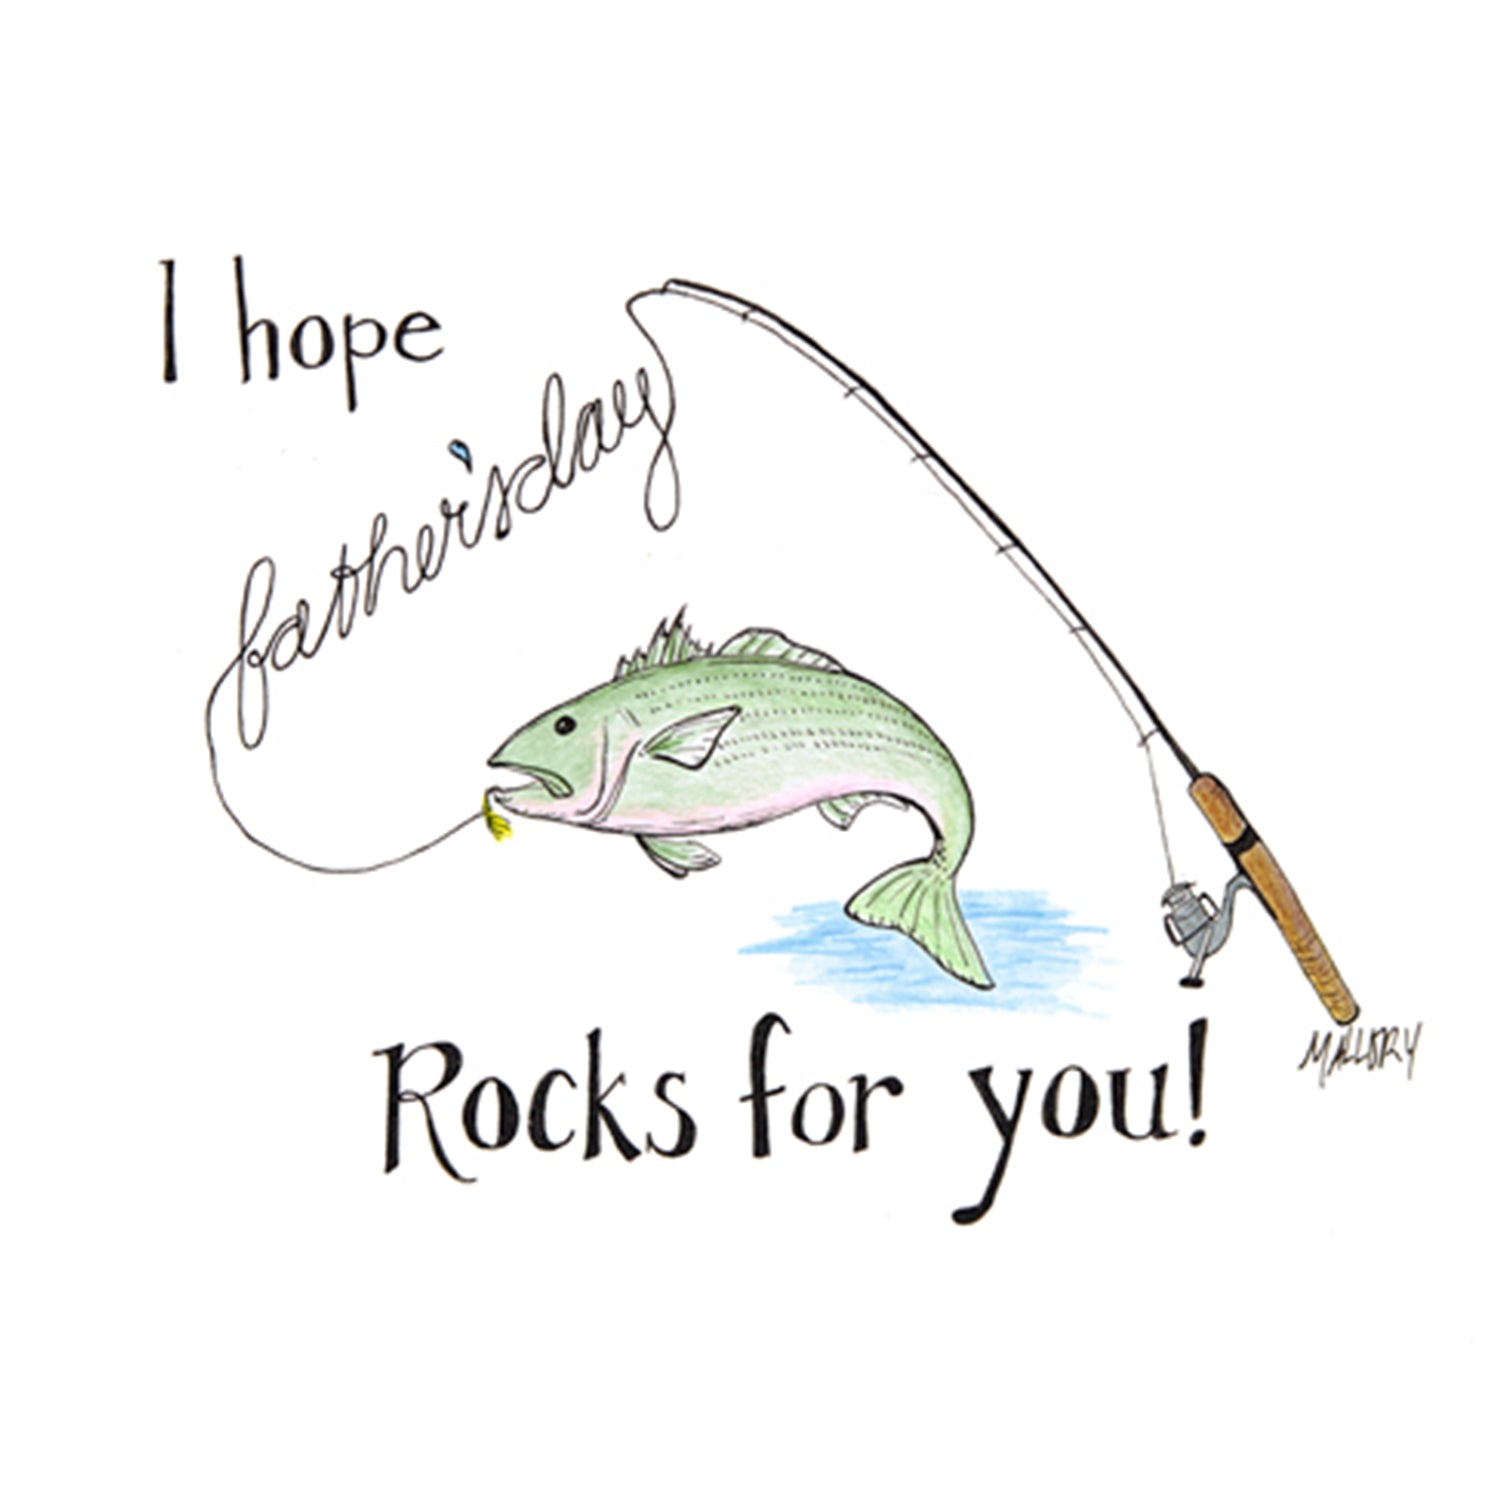 You Rock Stonefly Fly Fishing Card, Fishing Greeting Card, Fishing